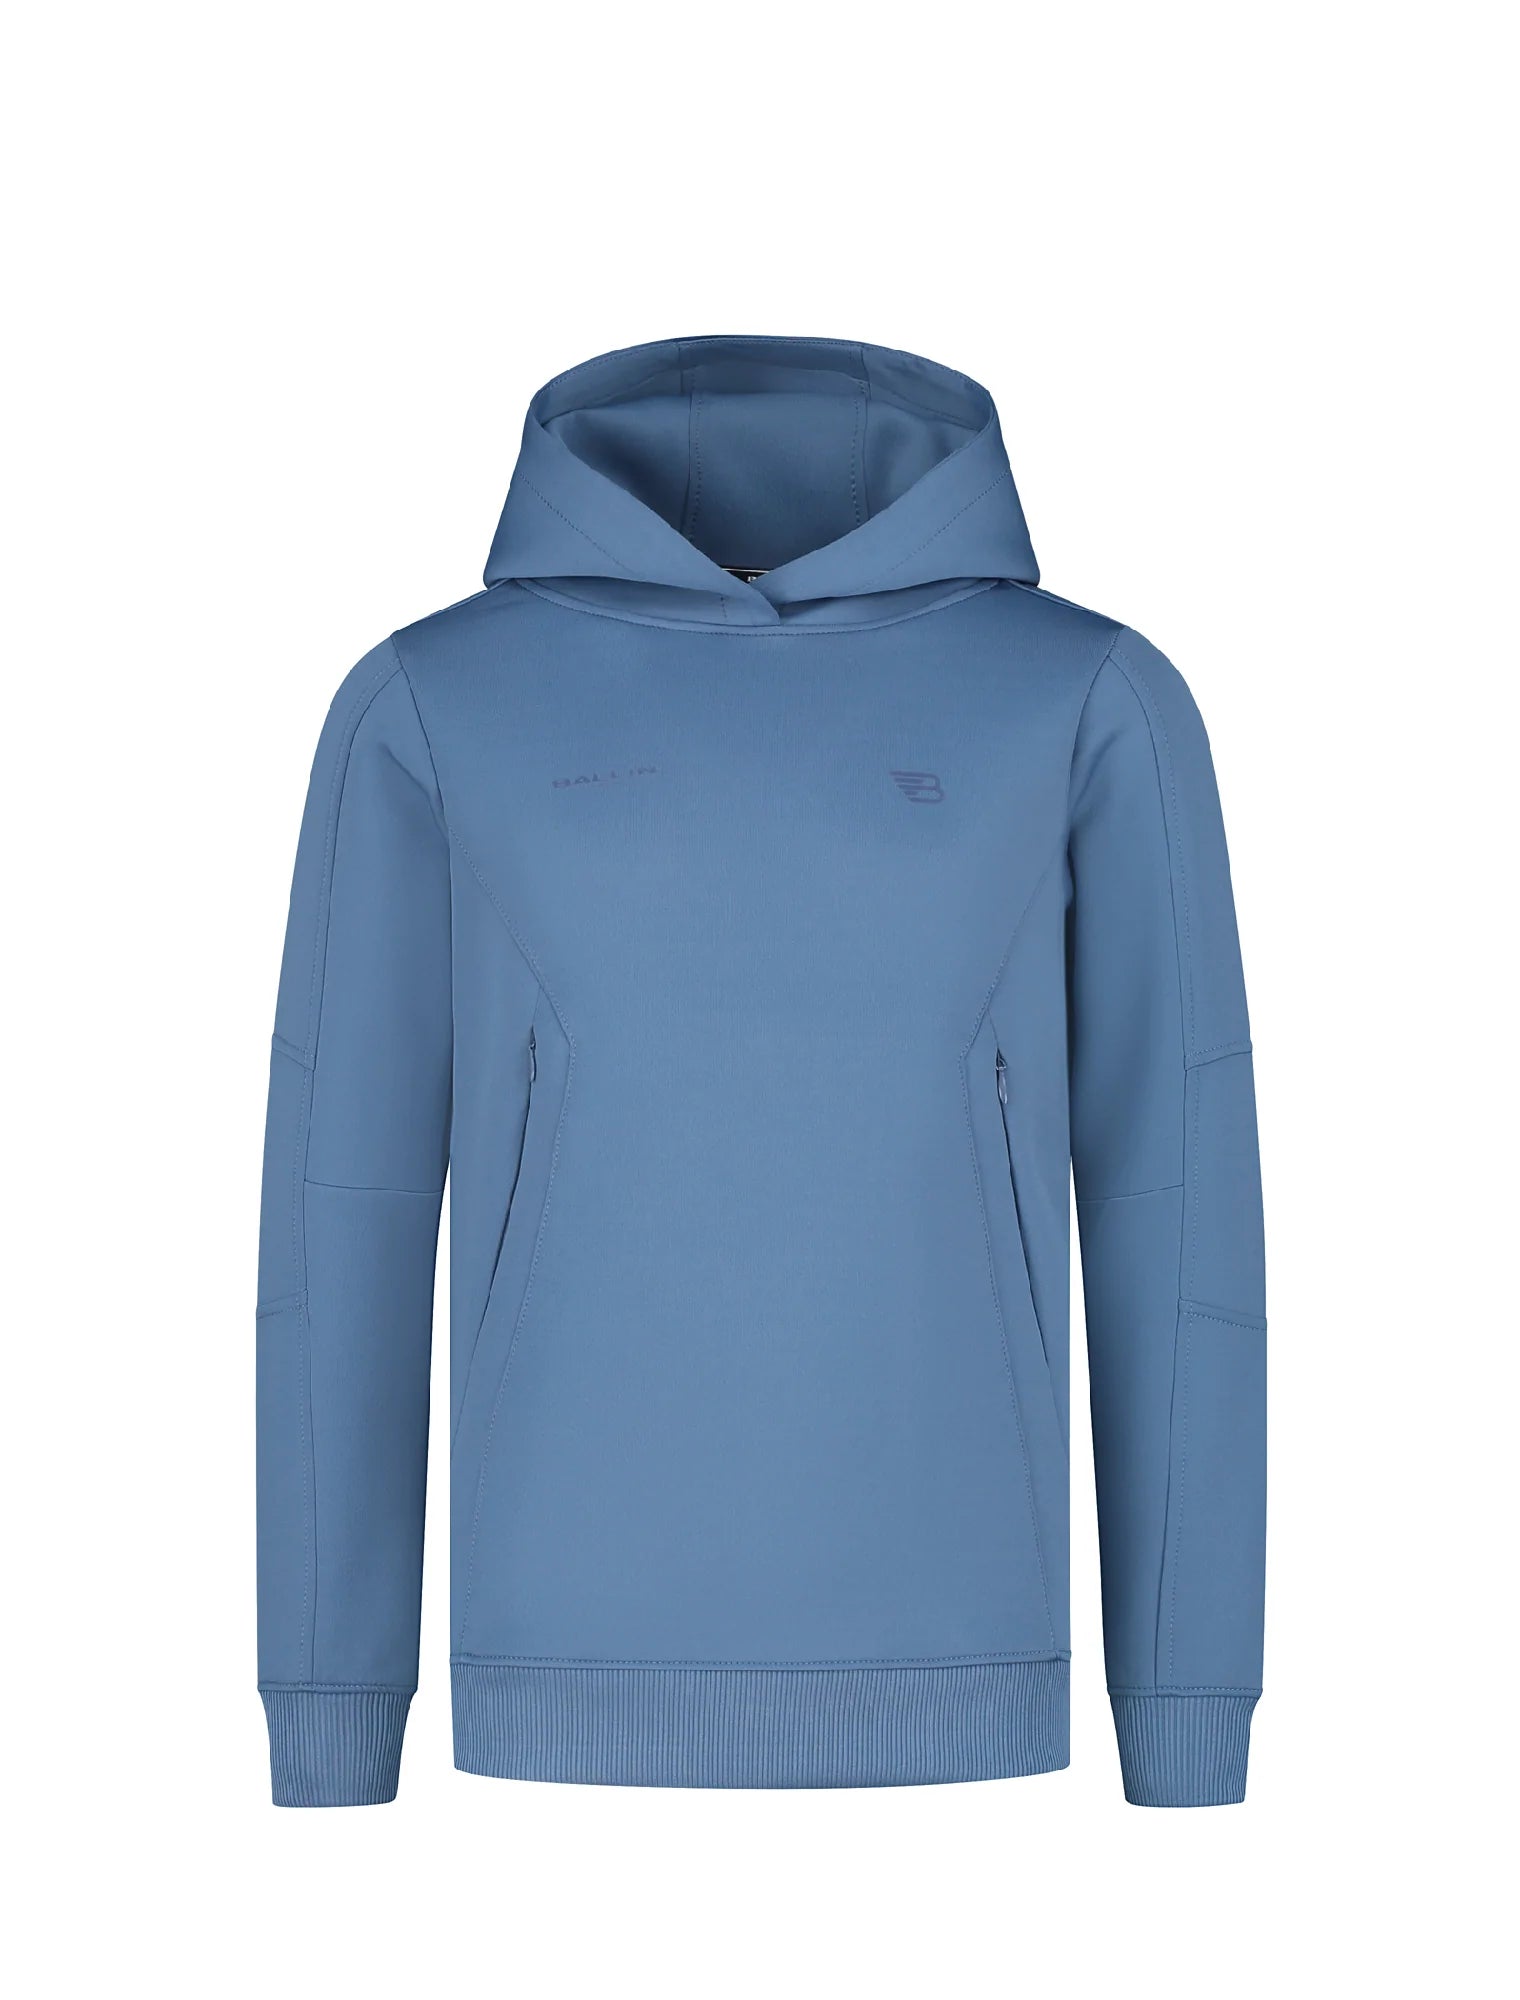 Unisexs Hooded sweater van Ballin Amsterdam in de kleur Mid blue in maat 176.